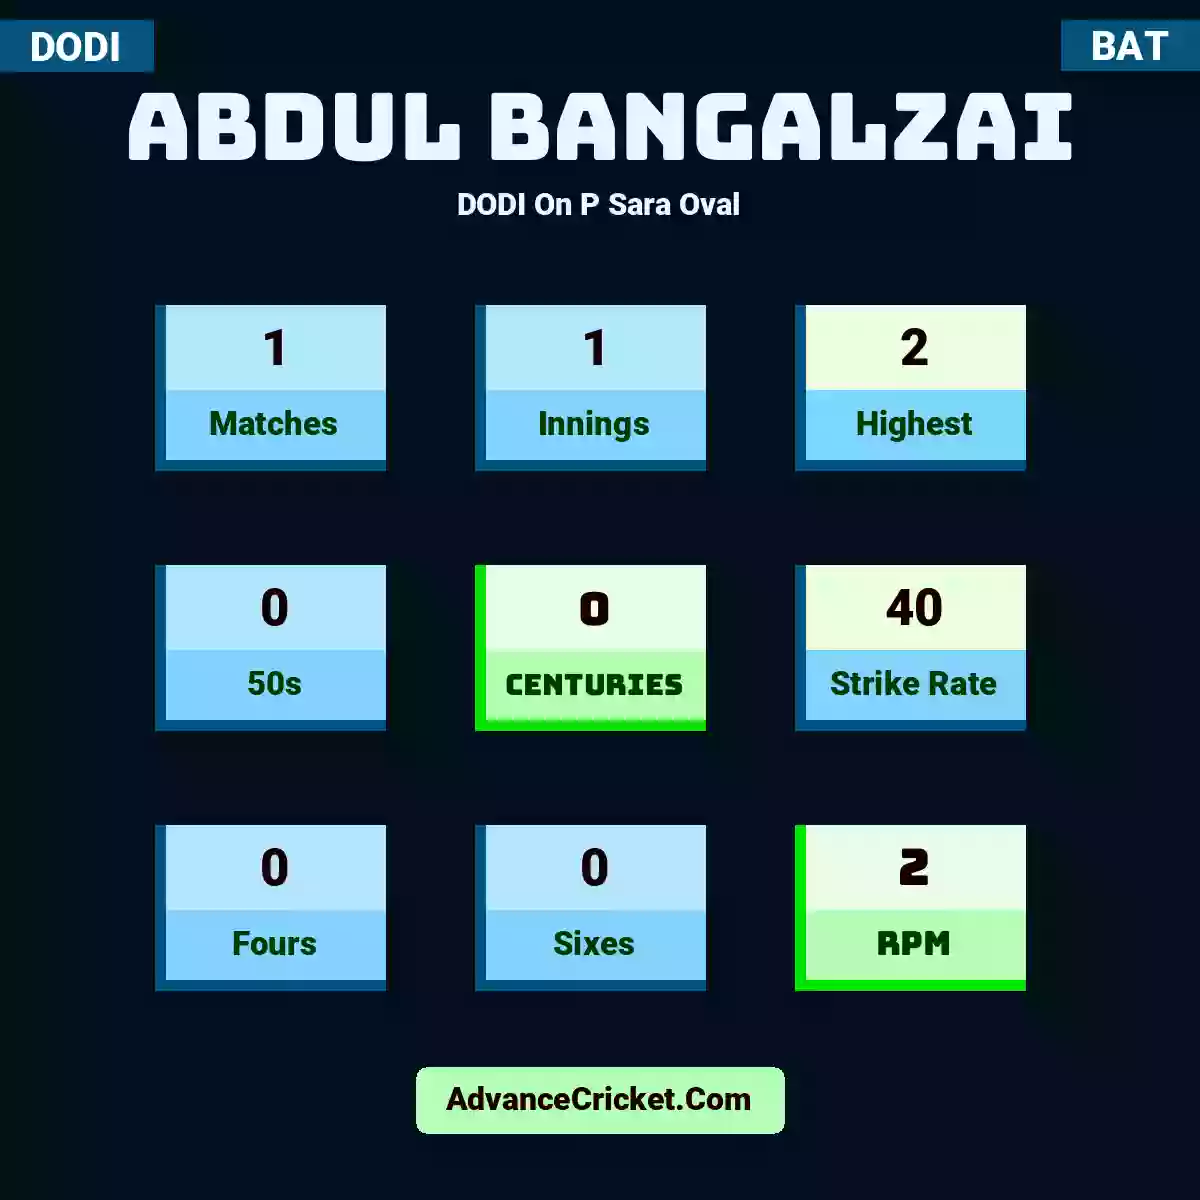 Abdul Bangalzai DODI  On P Sara Oval, Abdul Bangalzai played 1 matches, scored 2 runs as highest, 0 half-centuries, and 0 centuries, with a strike rate of 40. A.Bangalzai hit 0 fours and 0 sixes, with an RPM of 2.